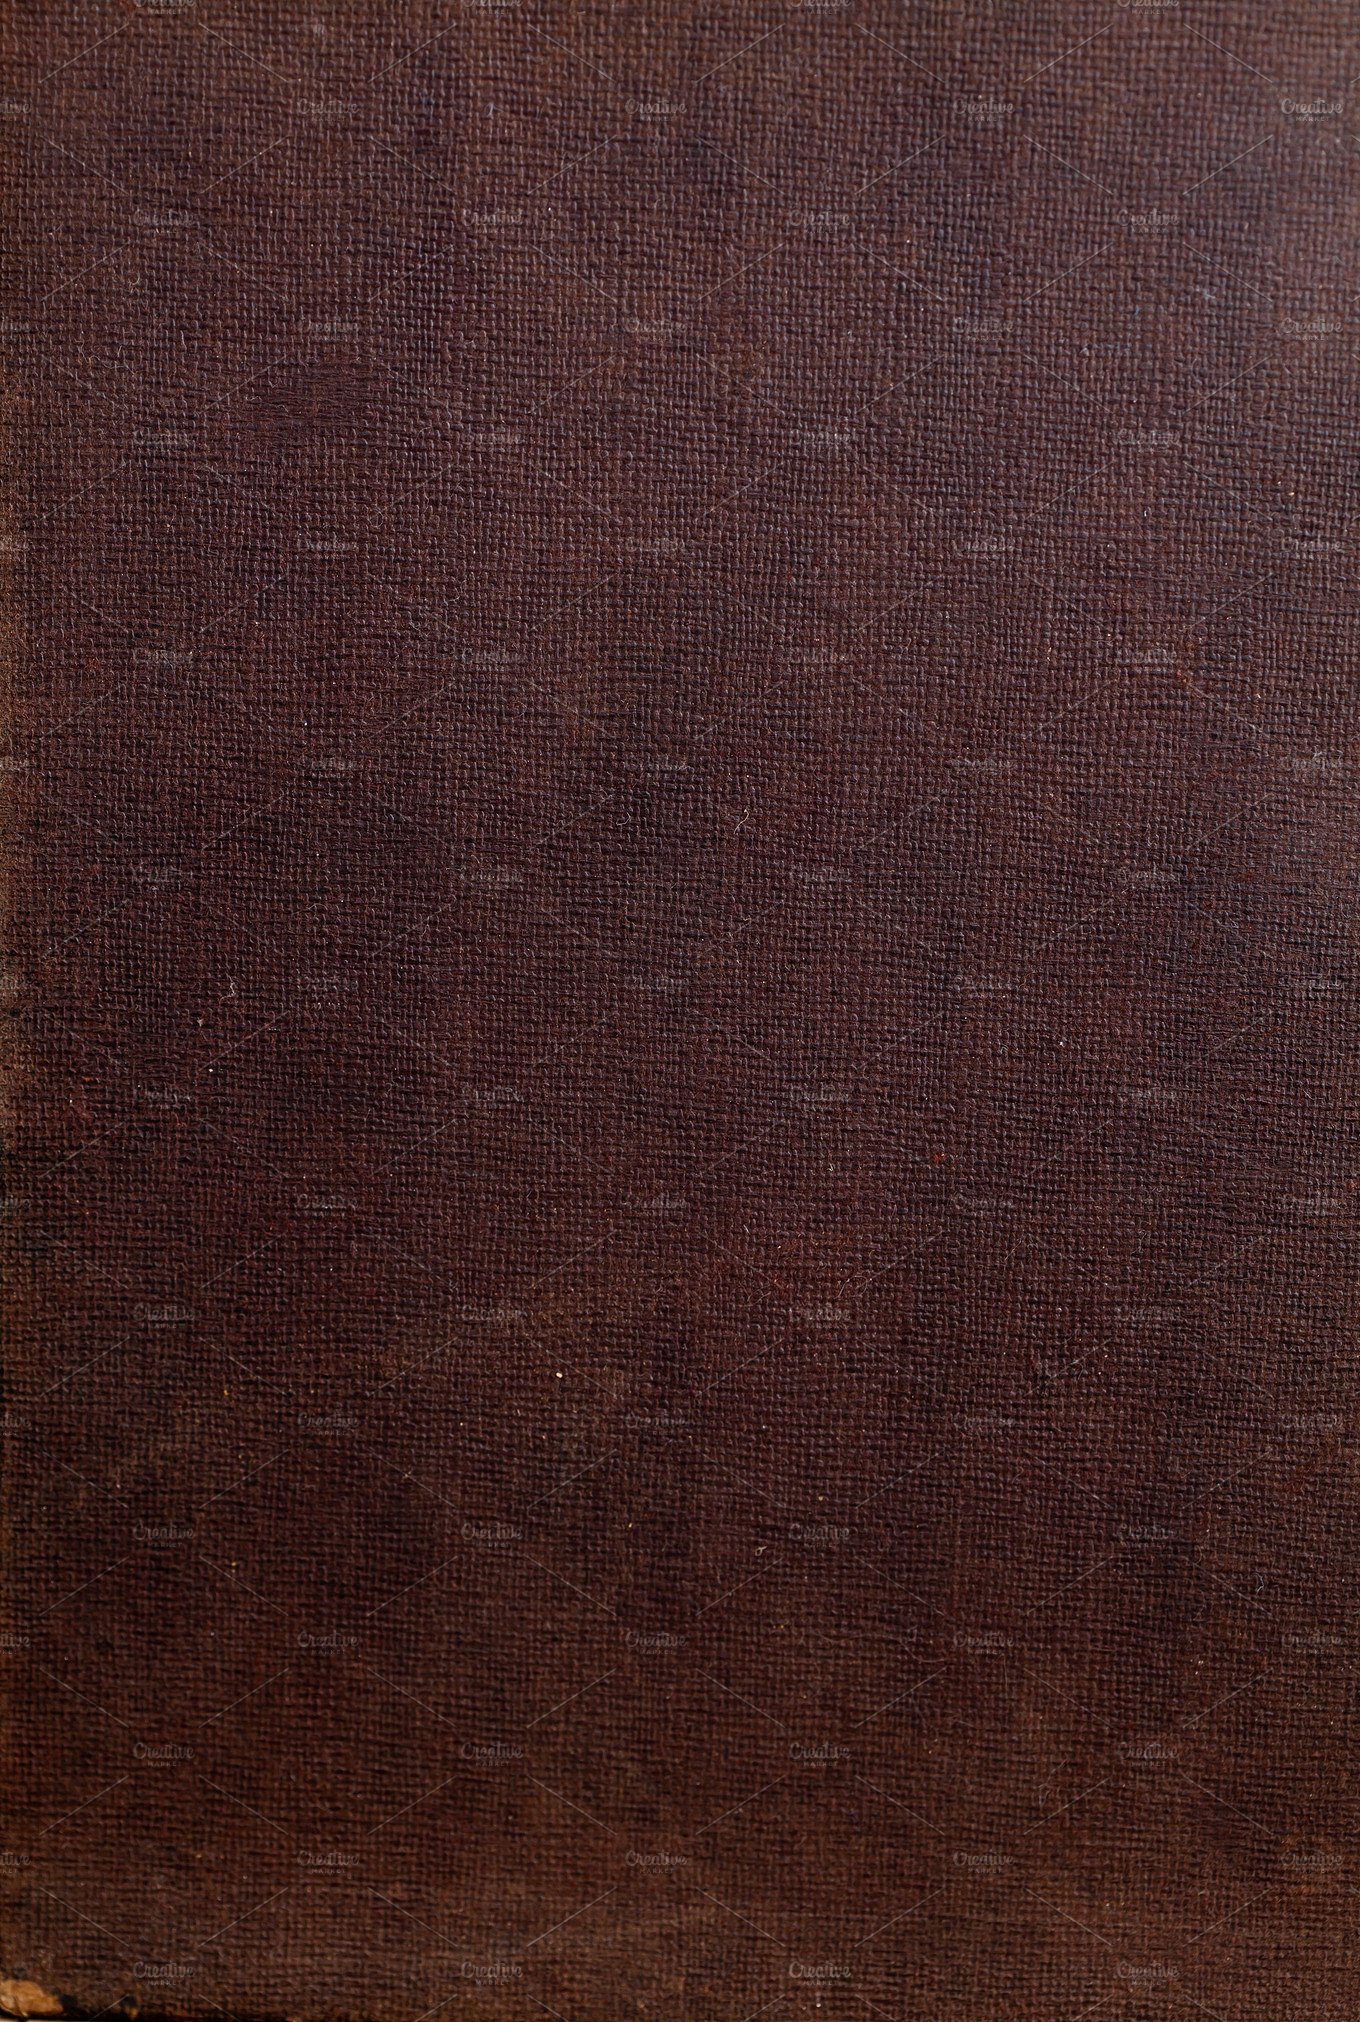 Old book cover texture ~ Abstract Photos ~ Creative Market